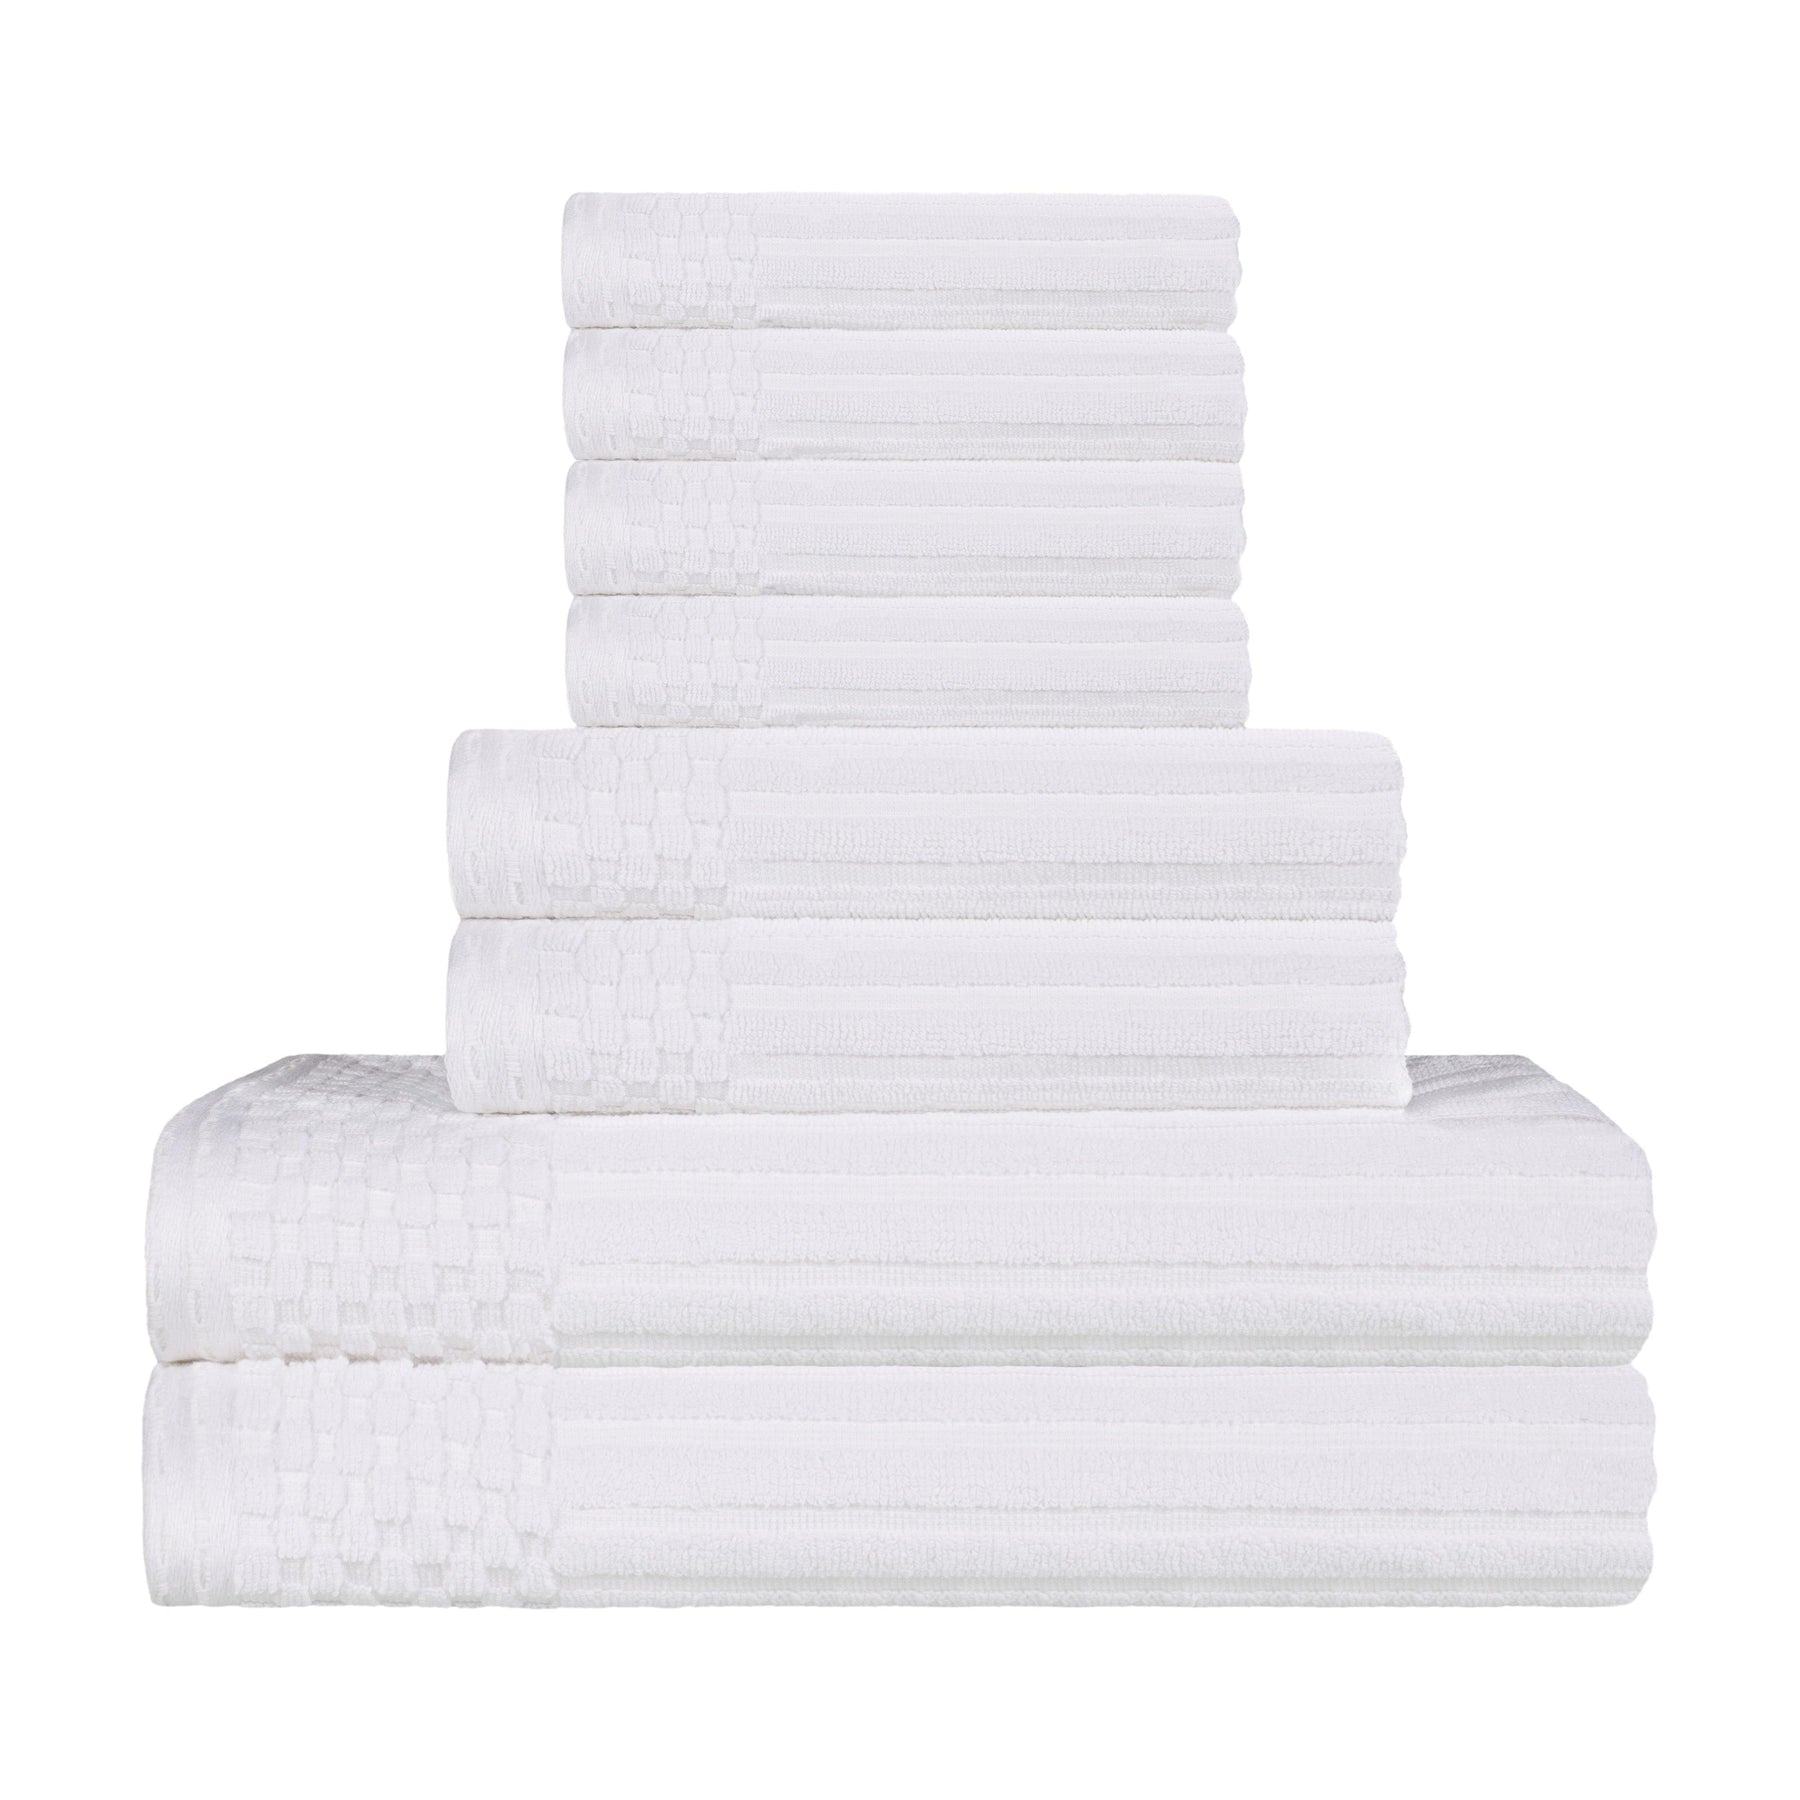 Ribbed Textured Cotton Medium Weight 8 Piece Towel Set - White